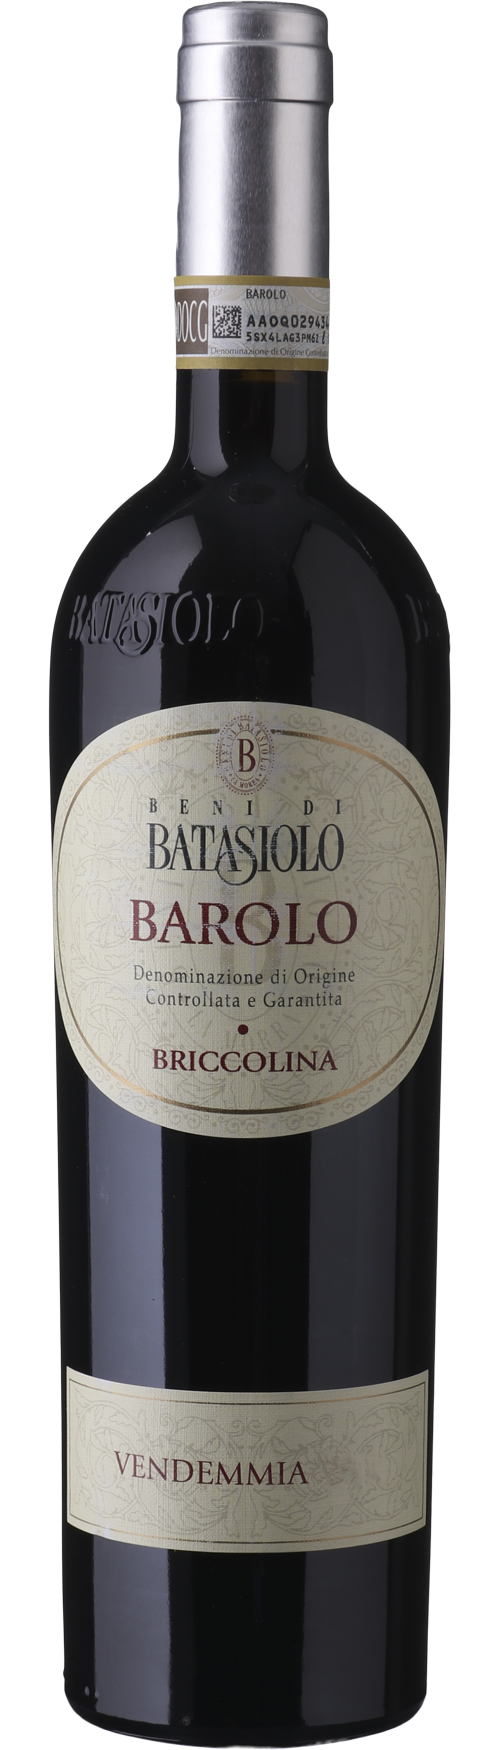 Beni Di Batasiolo Barolo Docg Briccolina, Single Vineyard 2009